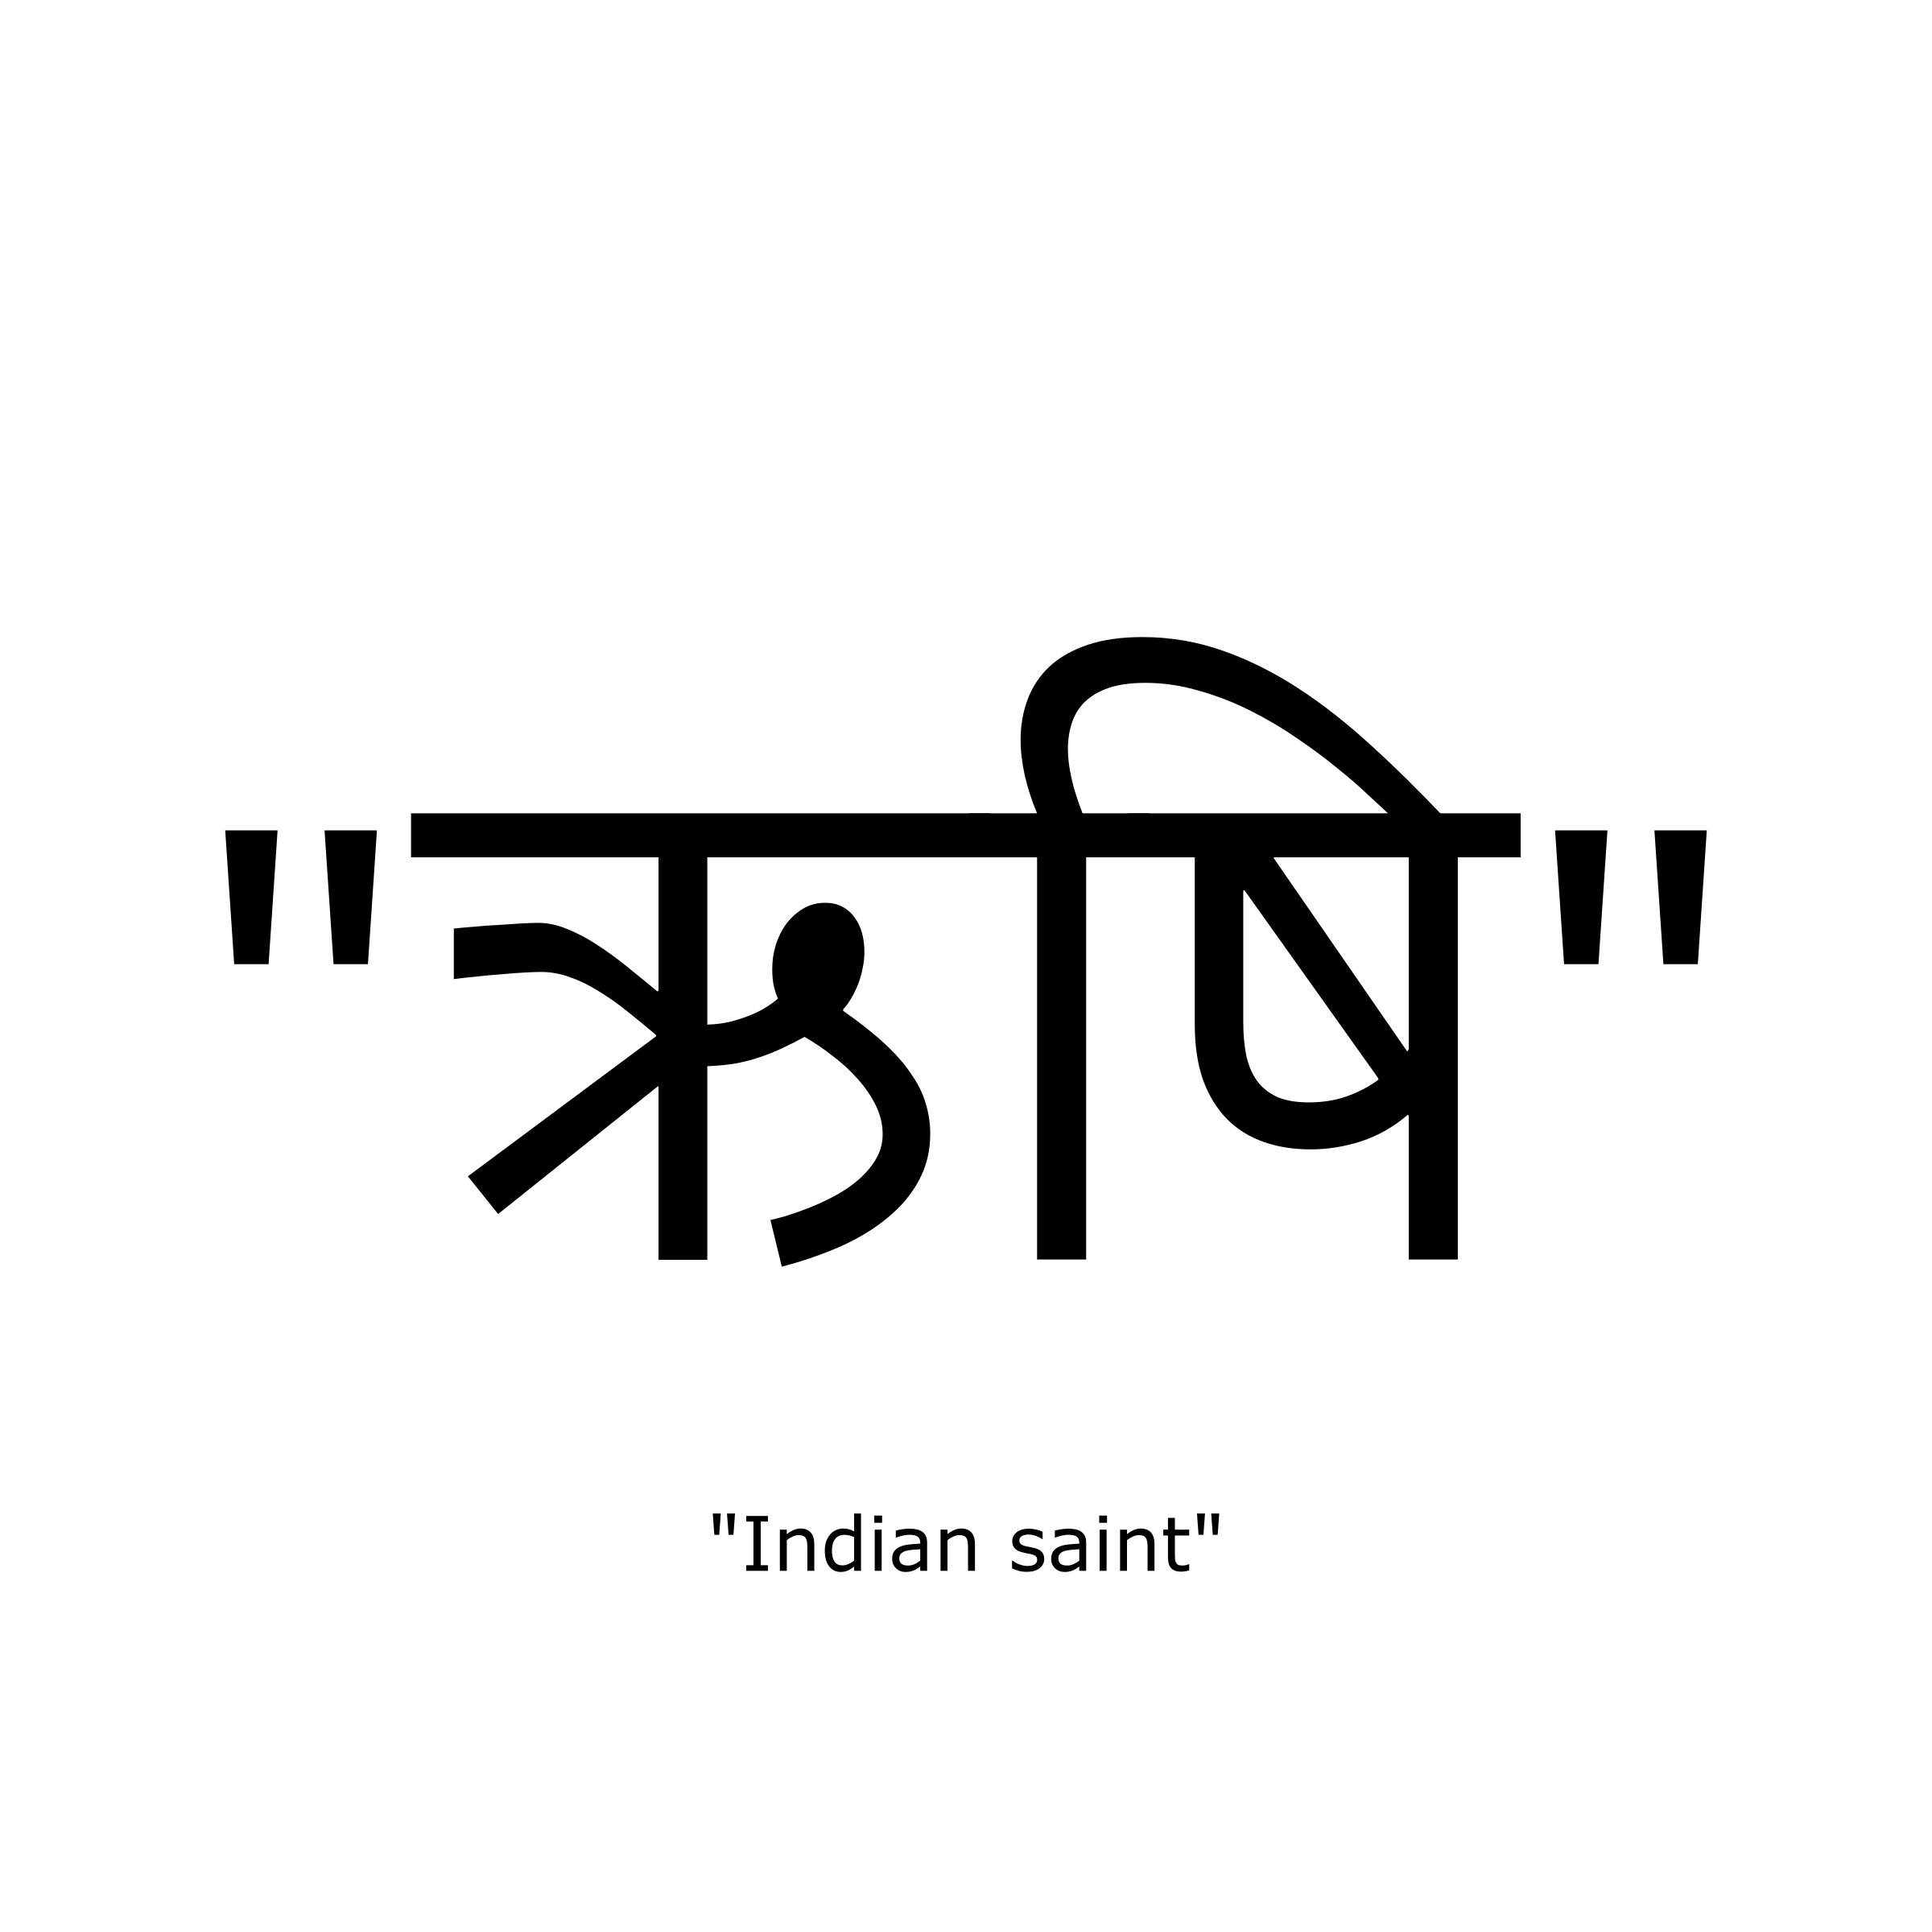 REQUEST Indian Saint Image png